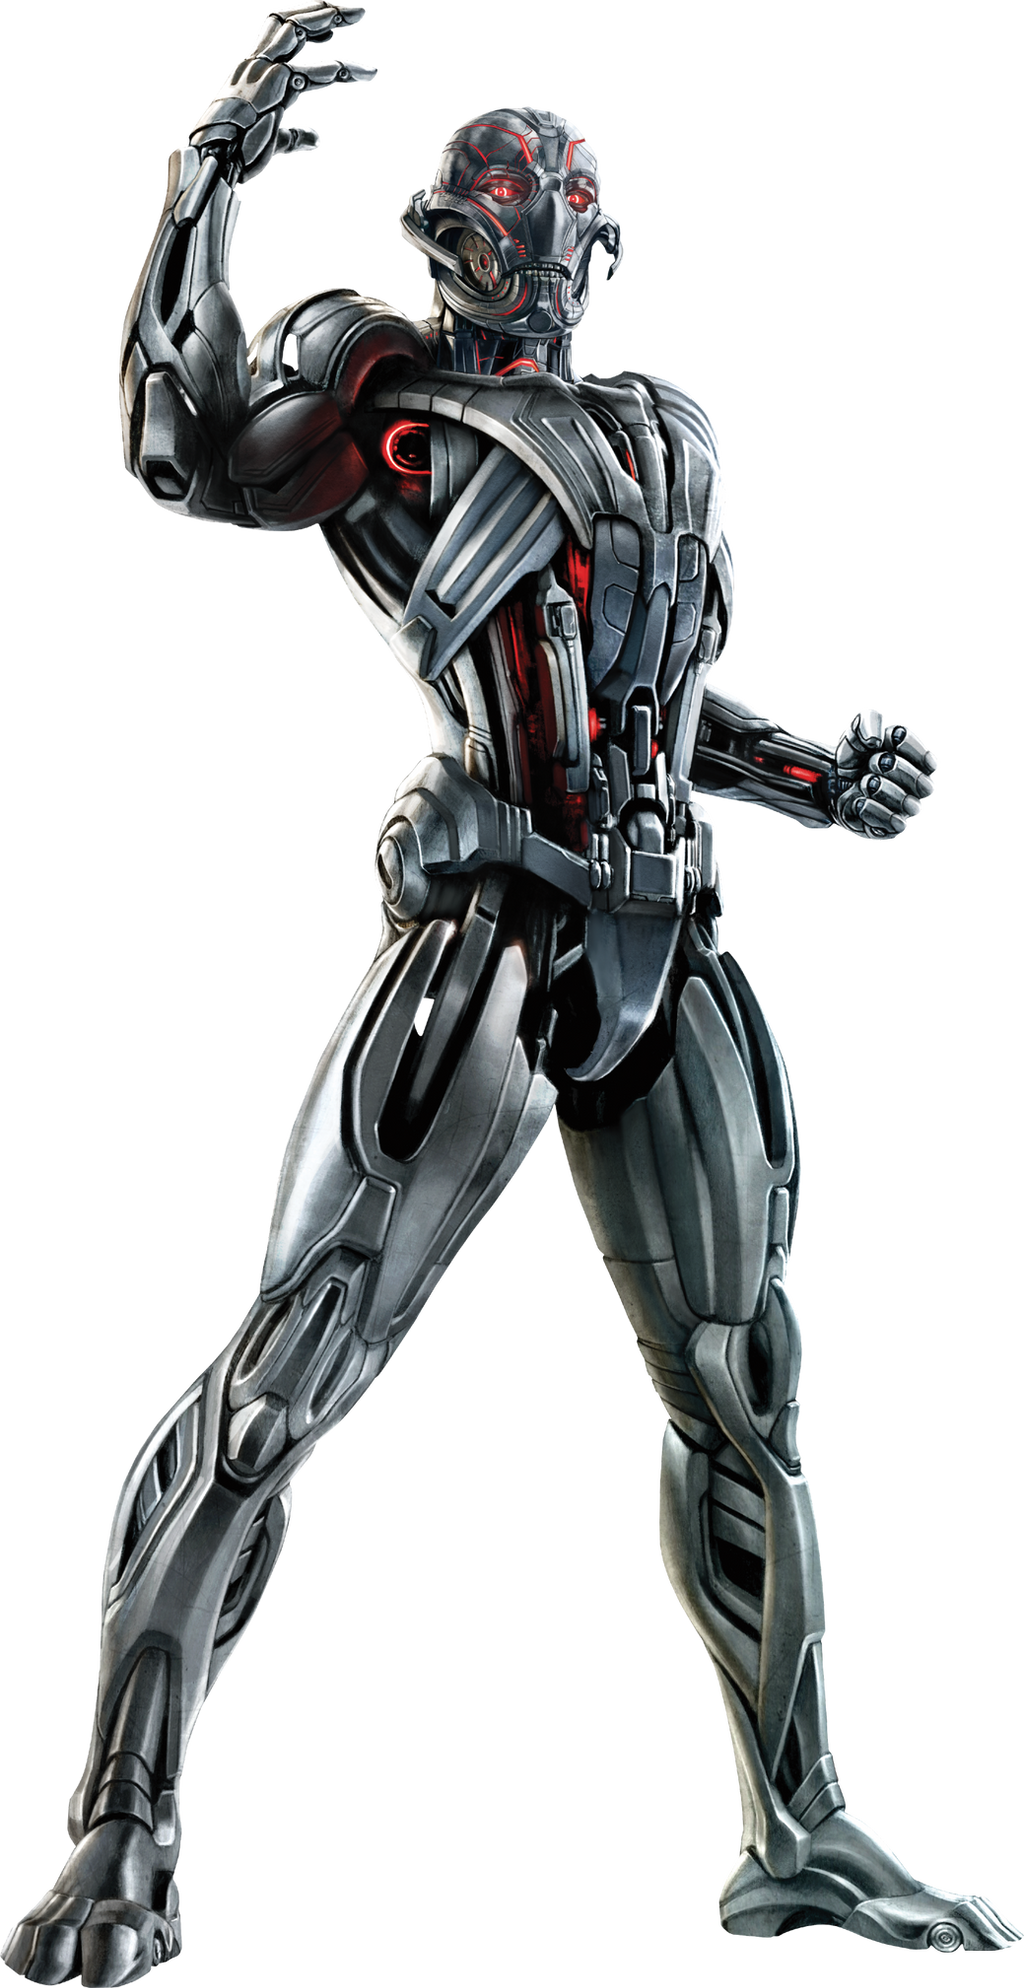 Marvel Avengers Aou Ultron Prime Png Transparent By Paintpot2 On Deviantart